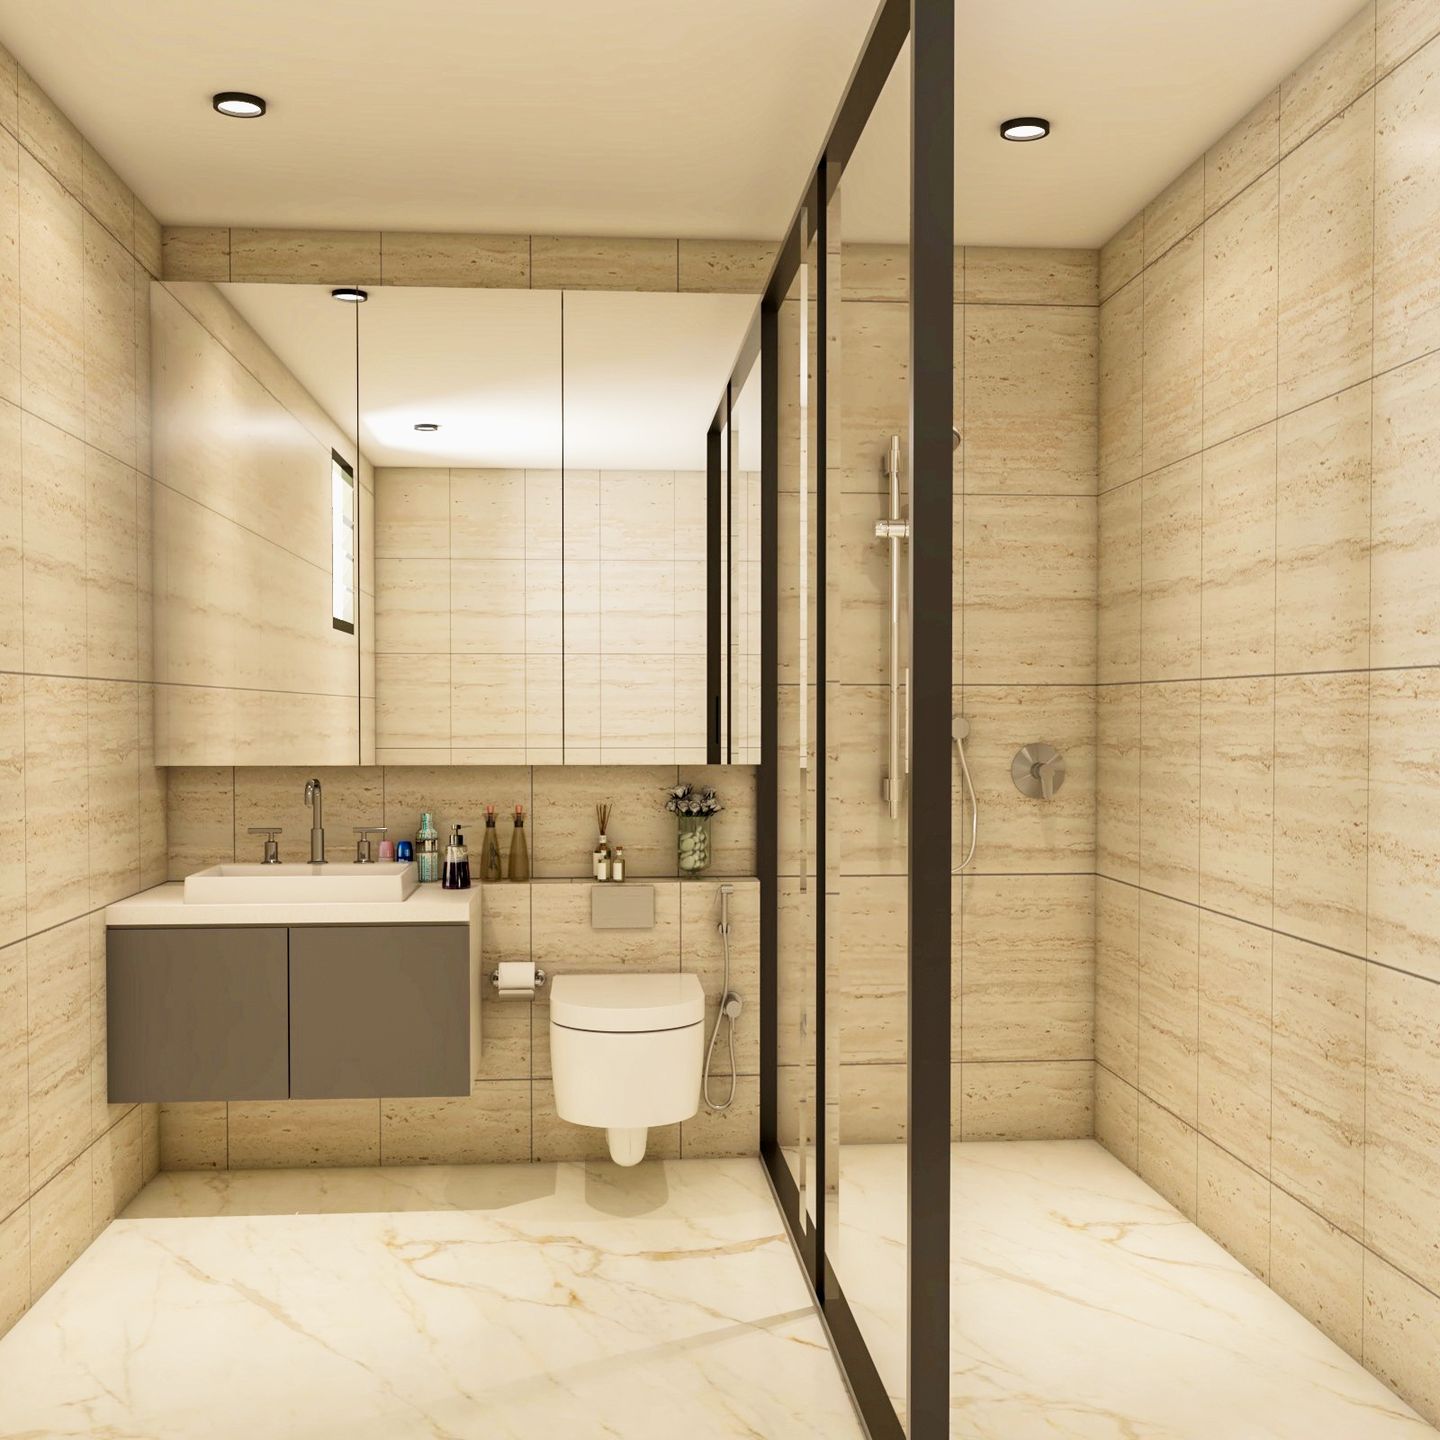 Beige And White Bathroom Design With Mirror - Livspace